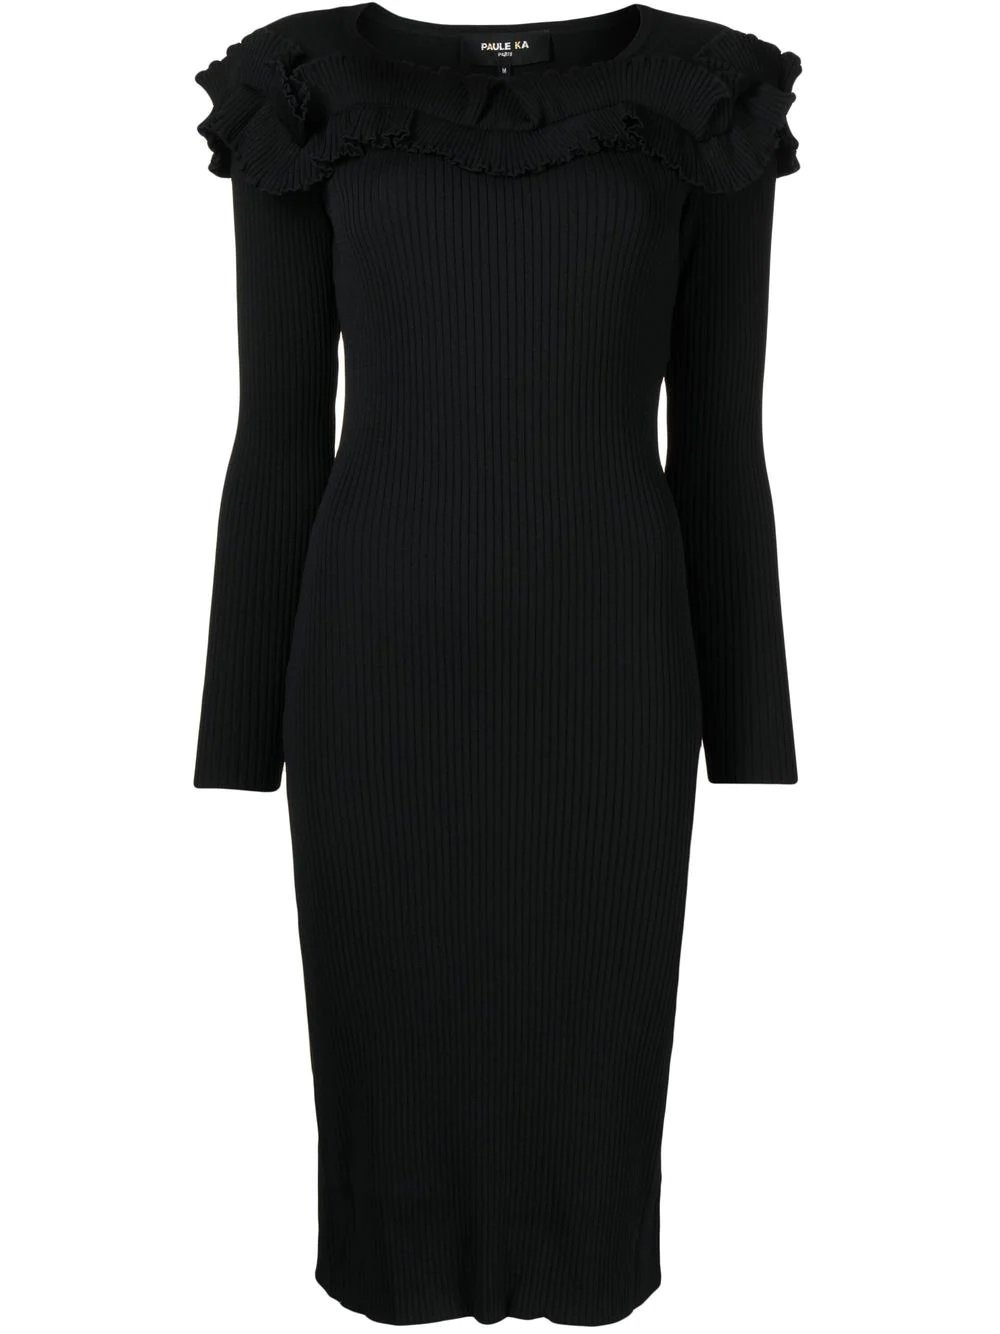 Paule Ka Ribbed-Knit Frilled Midi Dress in Black.jpg